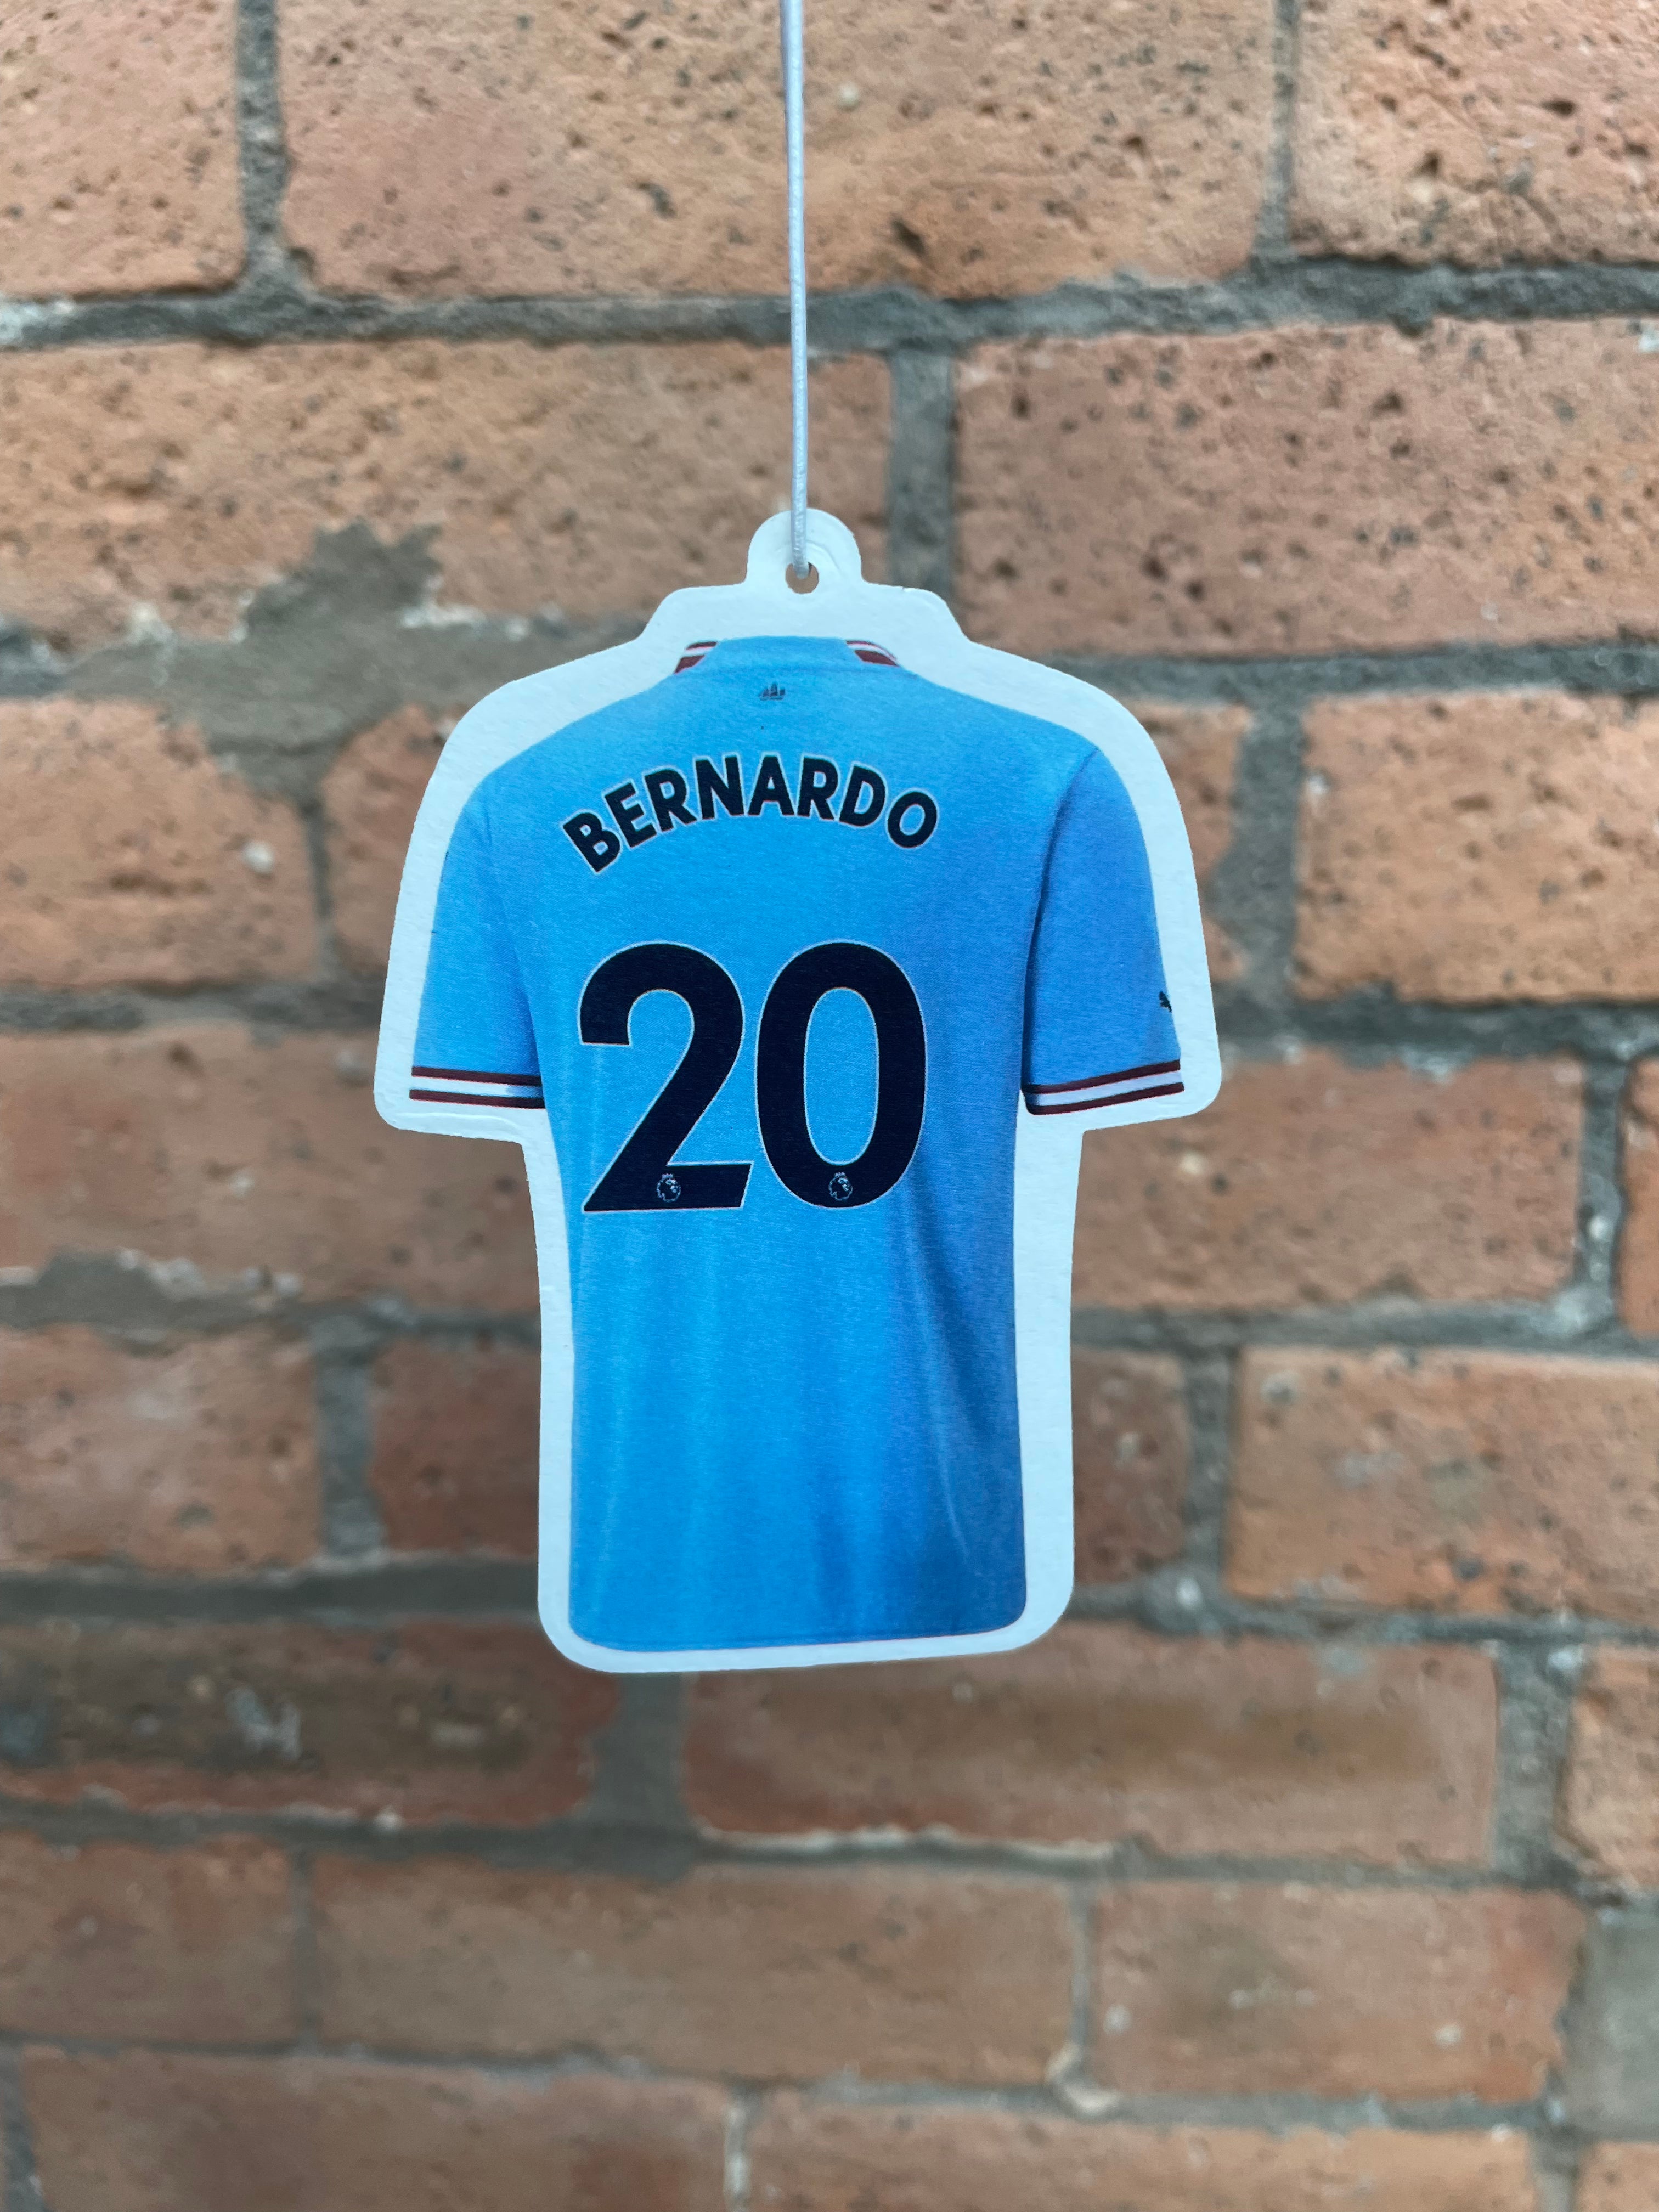 Bernardo air freshener – Thefunkclub1